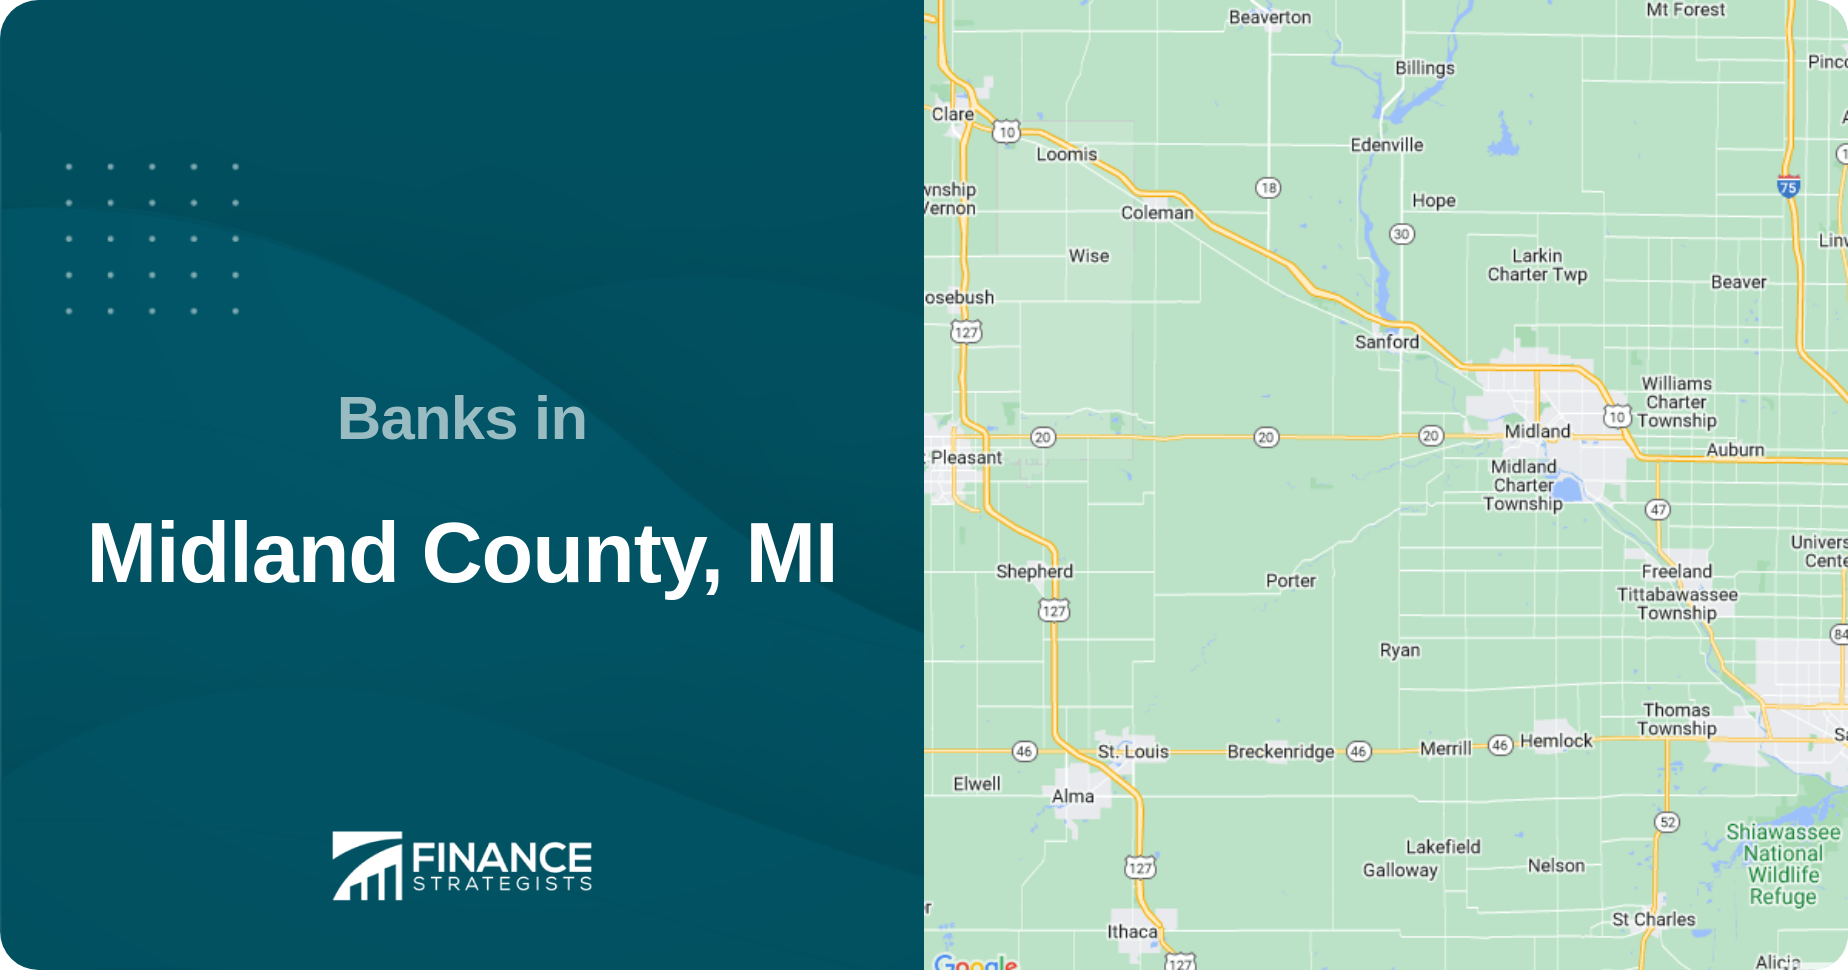 Banks in Midland County, MI